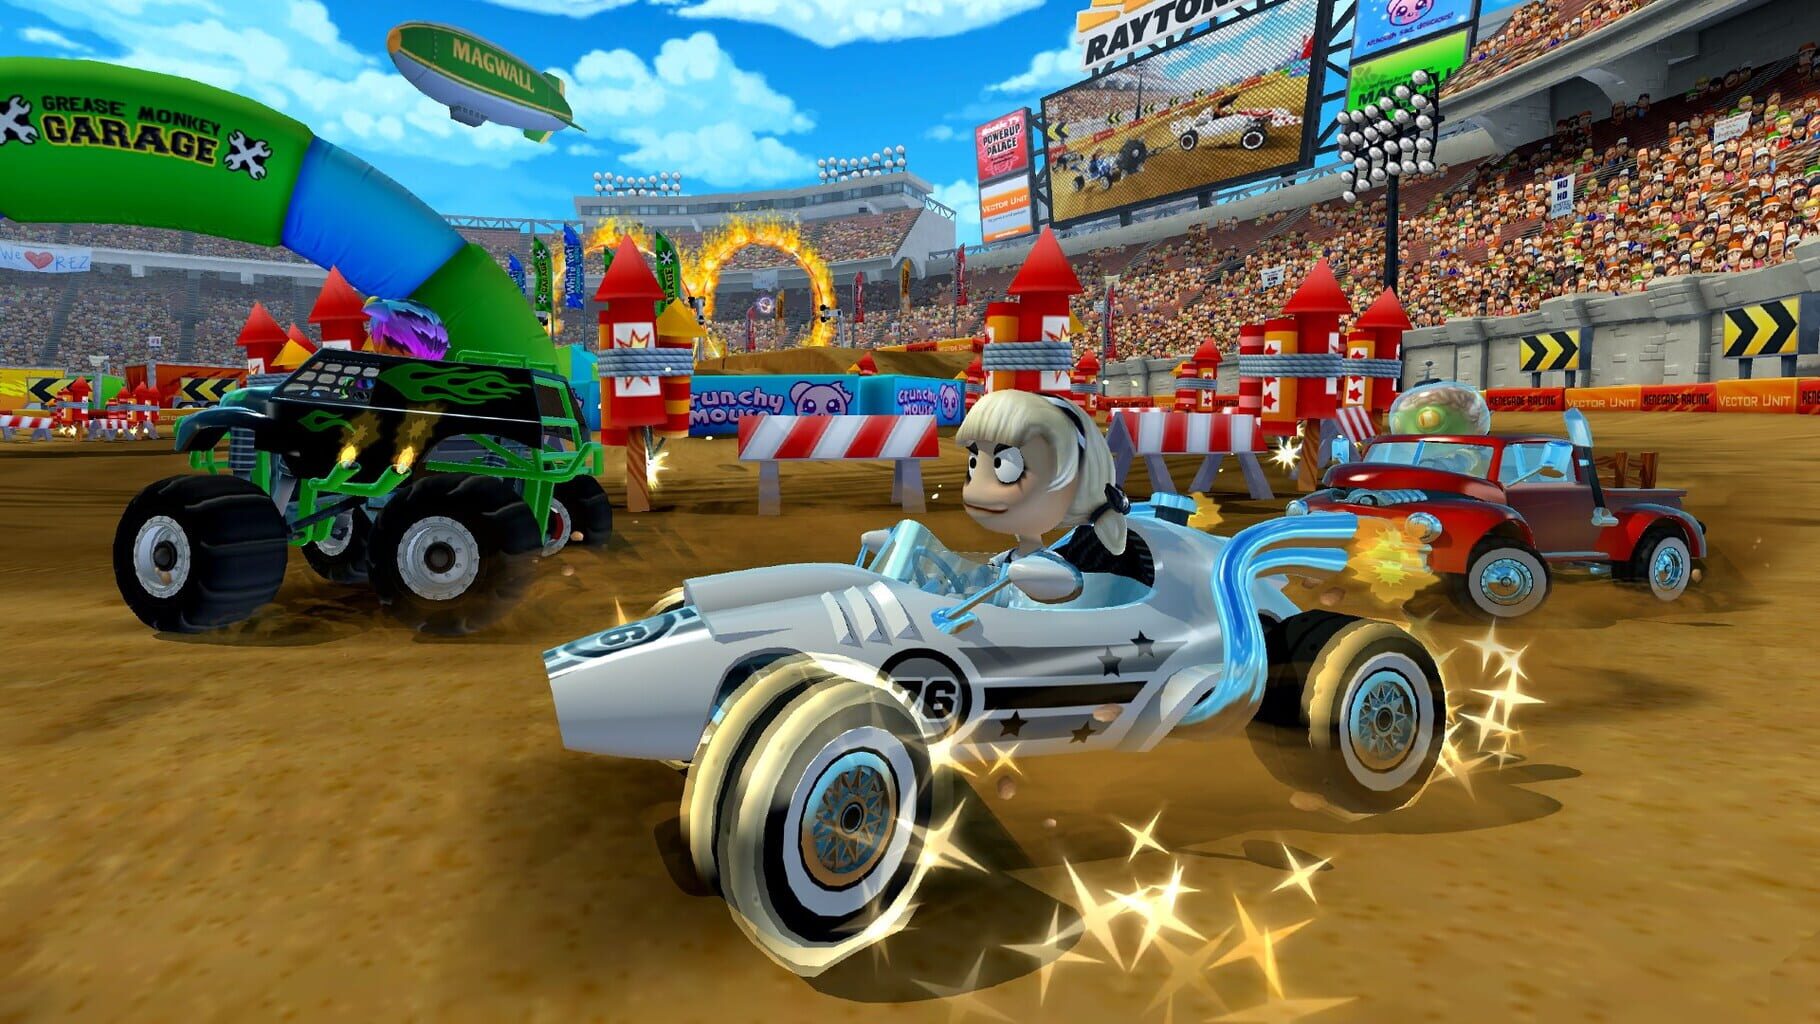 Beach Buggy Racing 2: Hot Wheels Edition screenshot